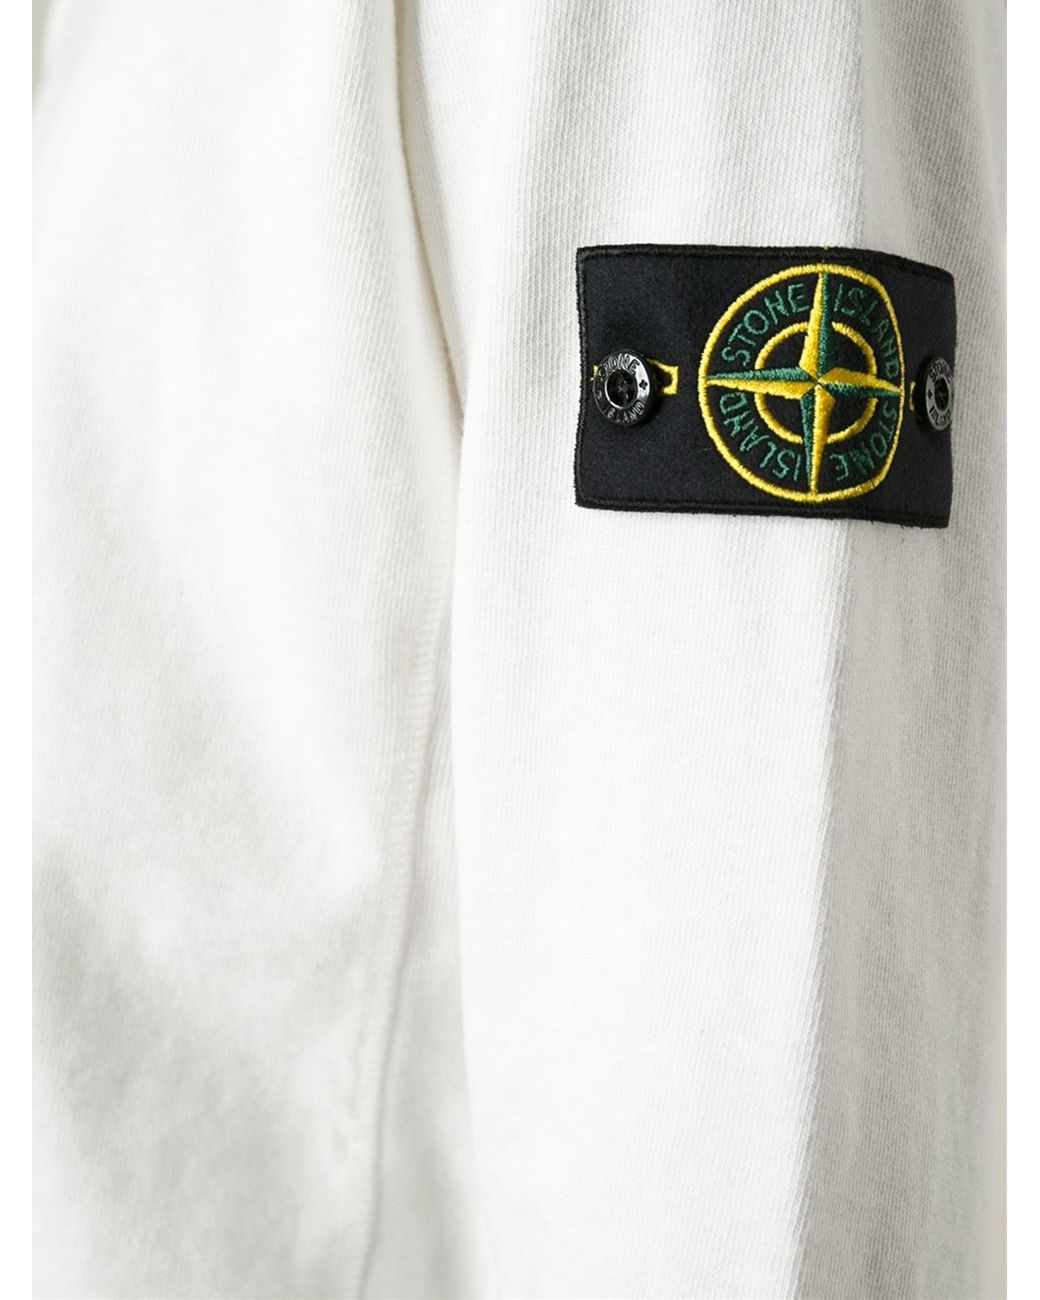 Stone Island Crew Neck Sweatshirt in White for Men | Lyst